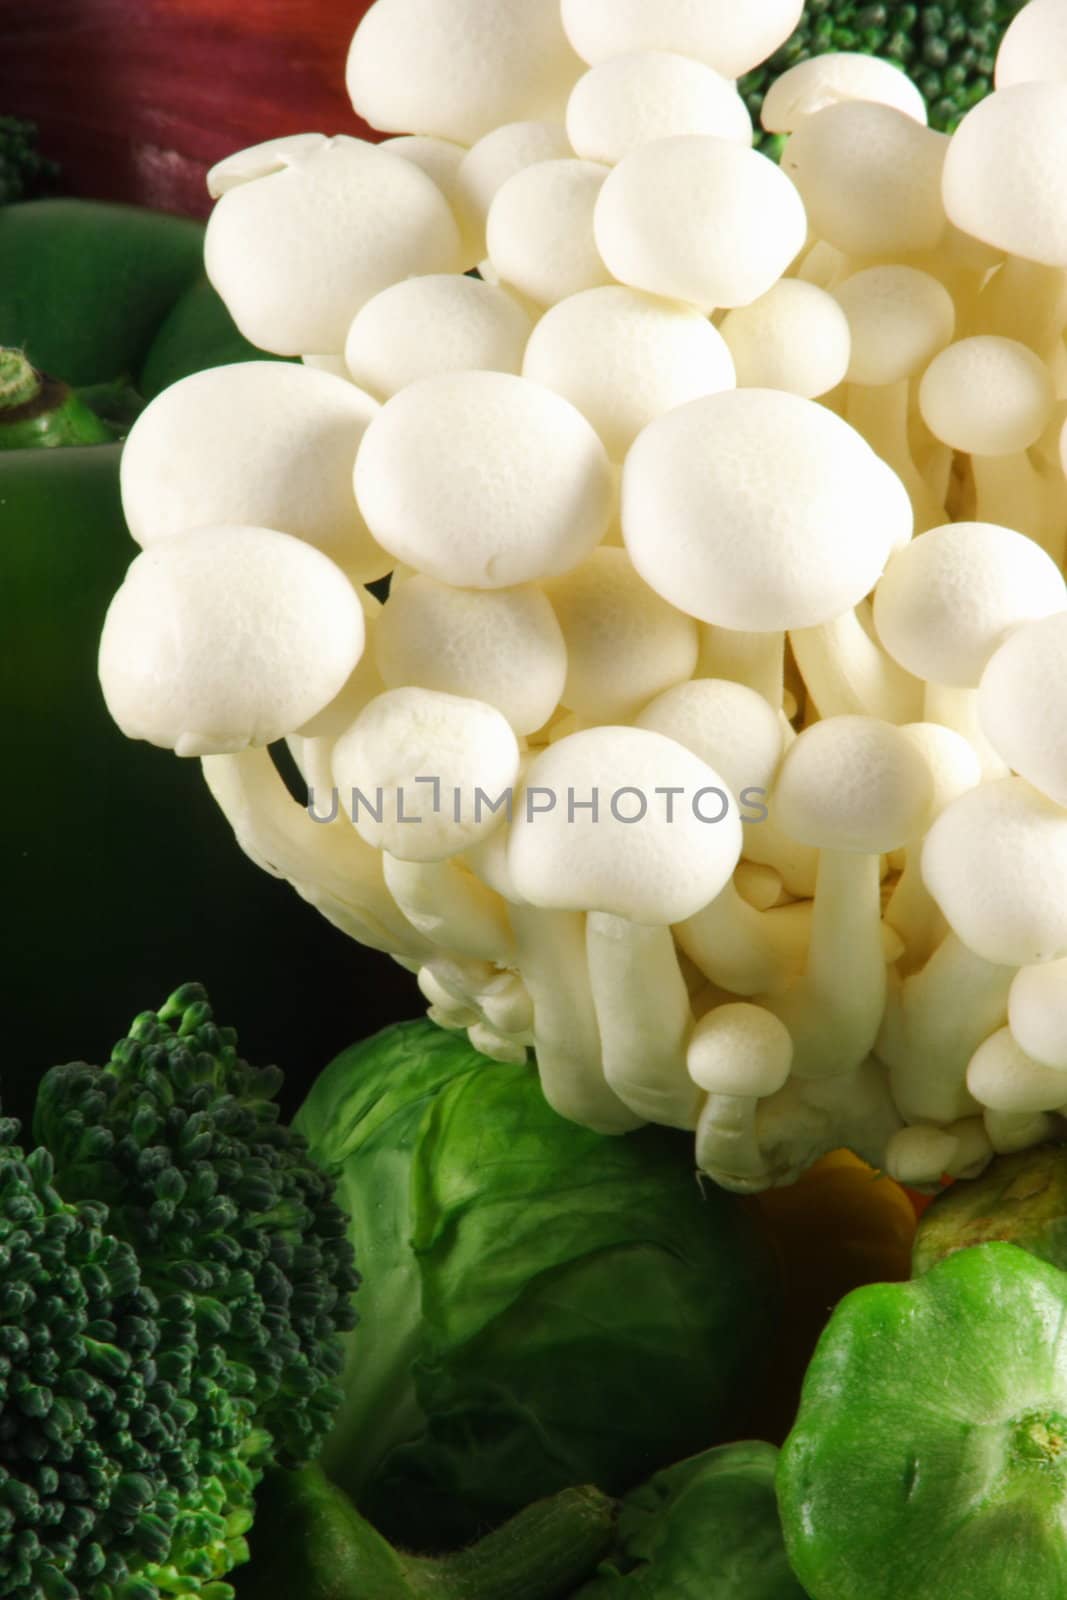 fresh organic mushroom perfect meal companion